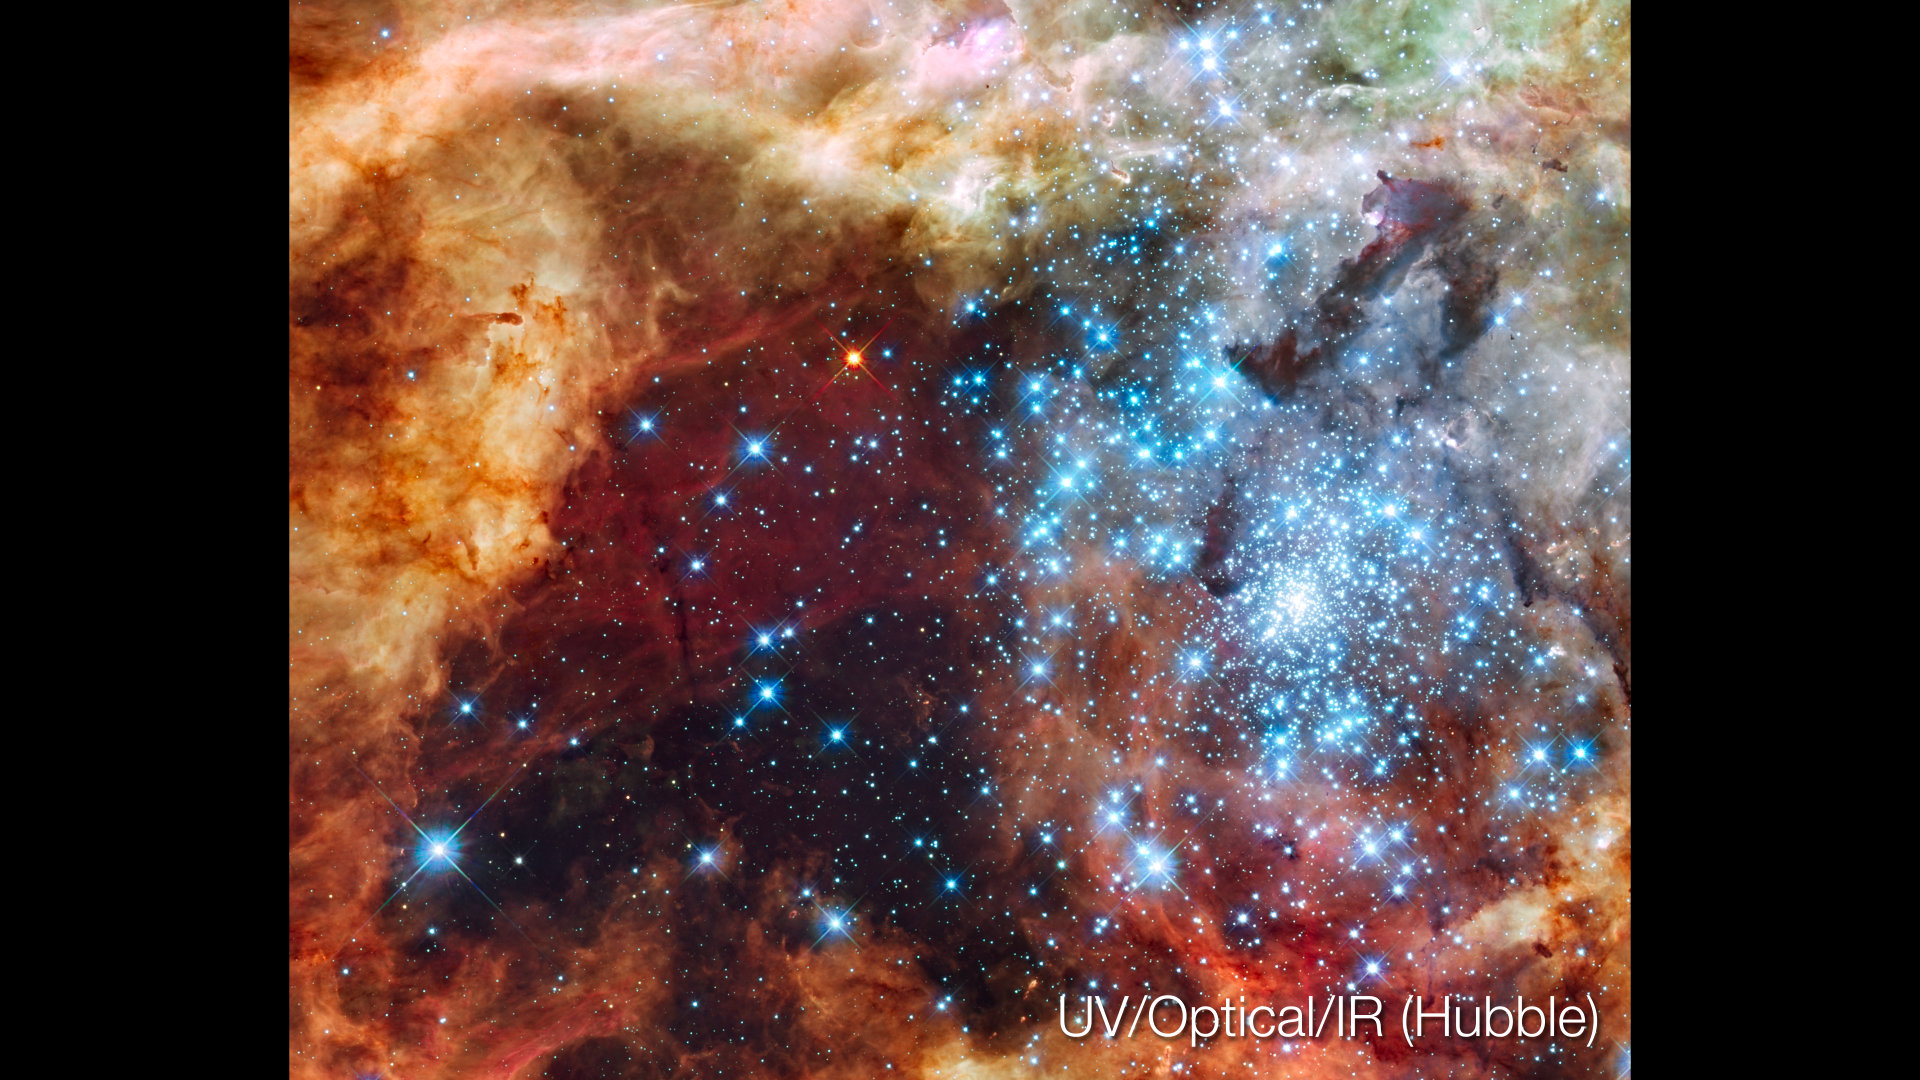 Preview Image for 30 Doradus: A Massive Star-Forming Region